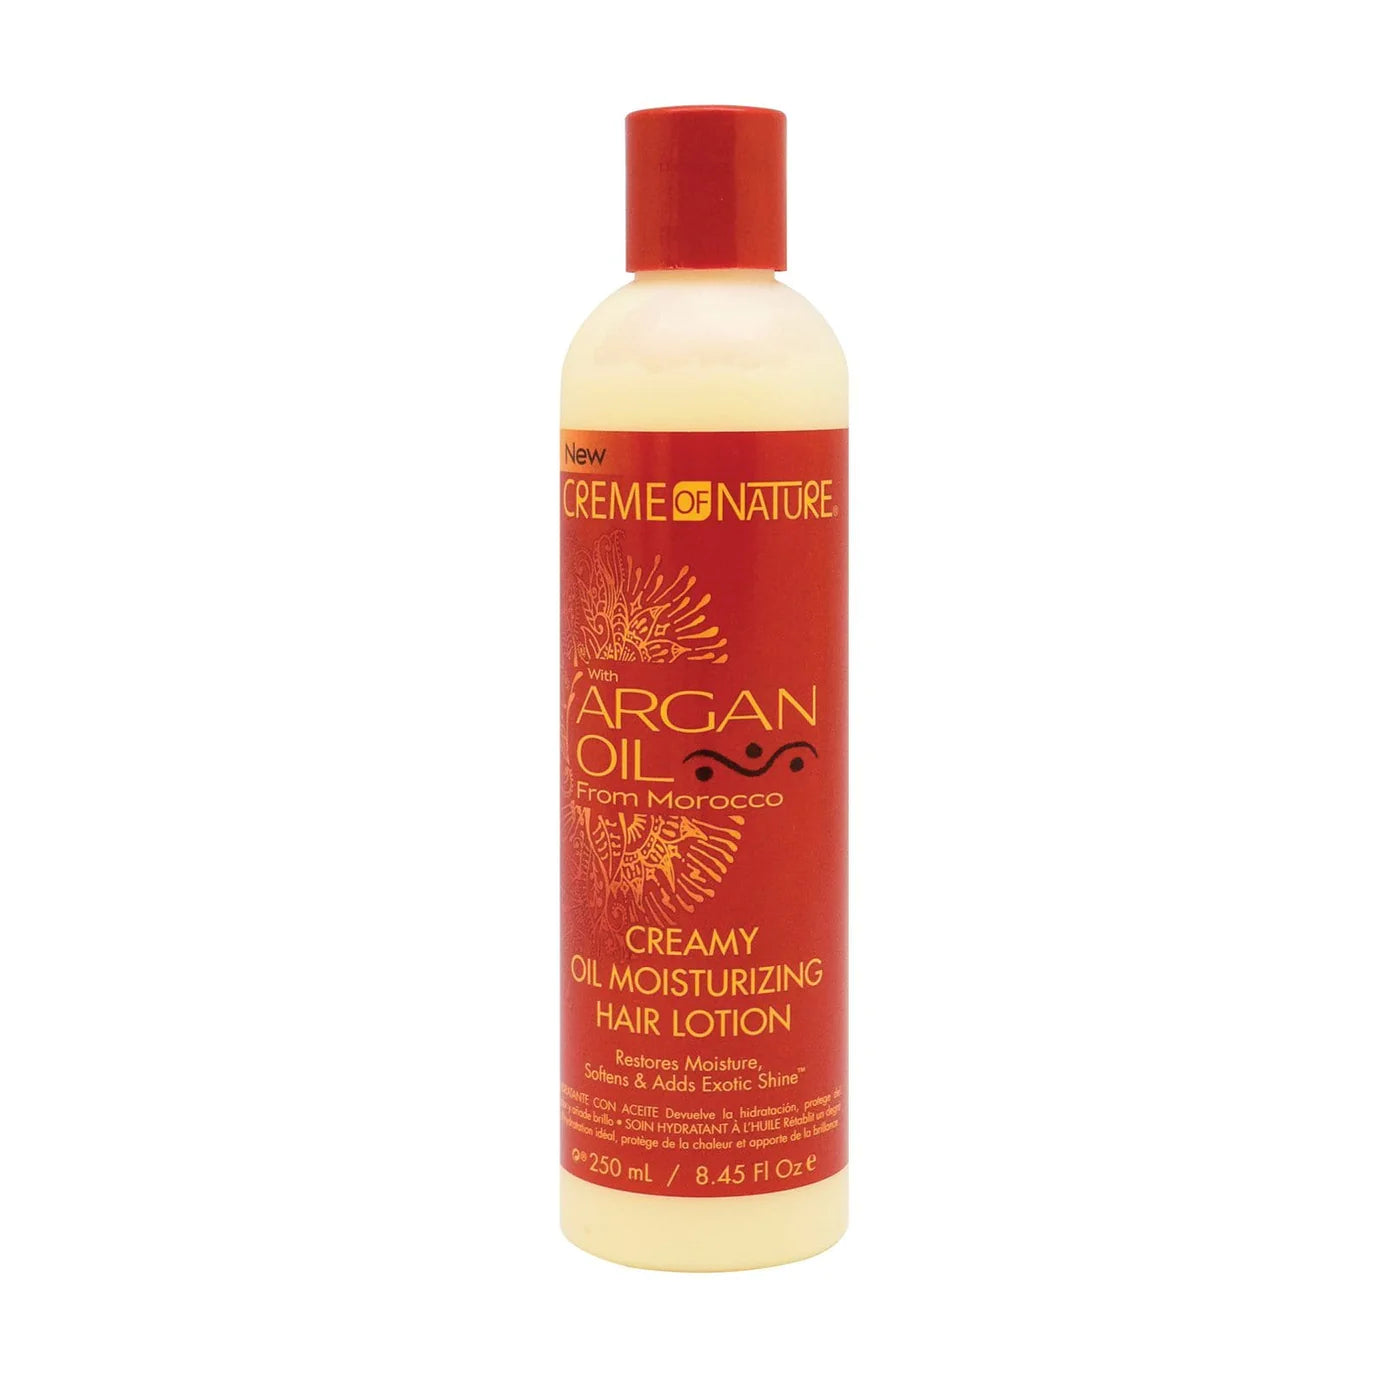 Creme of nature argan oil creamy oil moisturising hair lotion 8.45fl oz